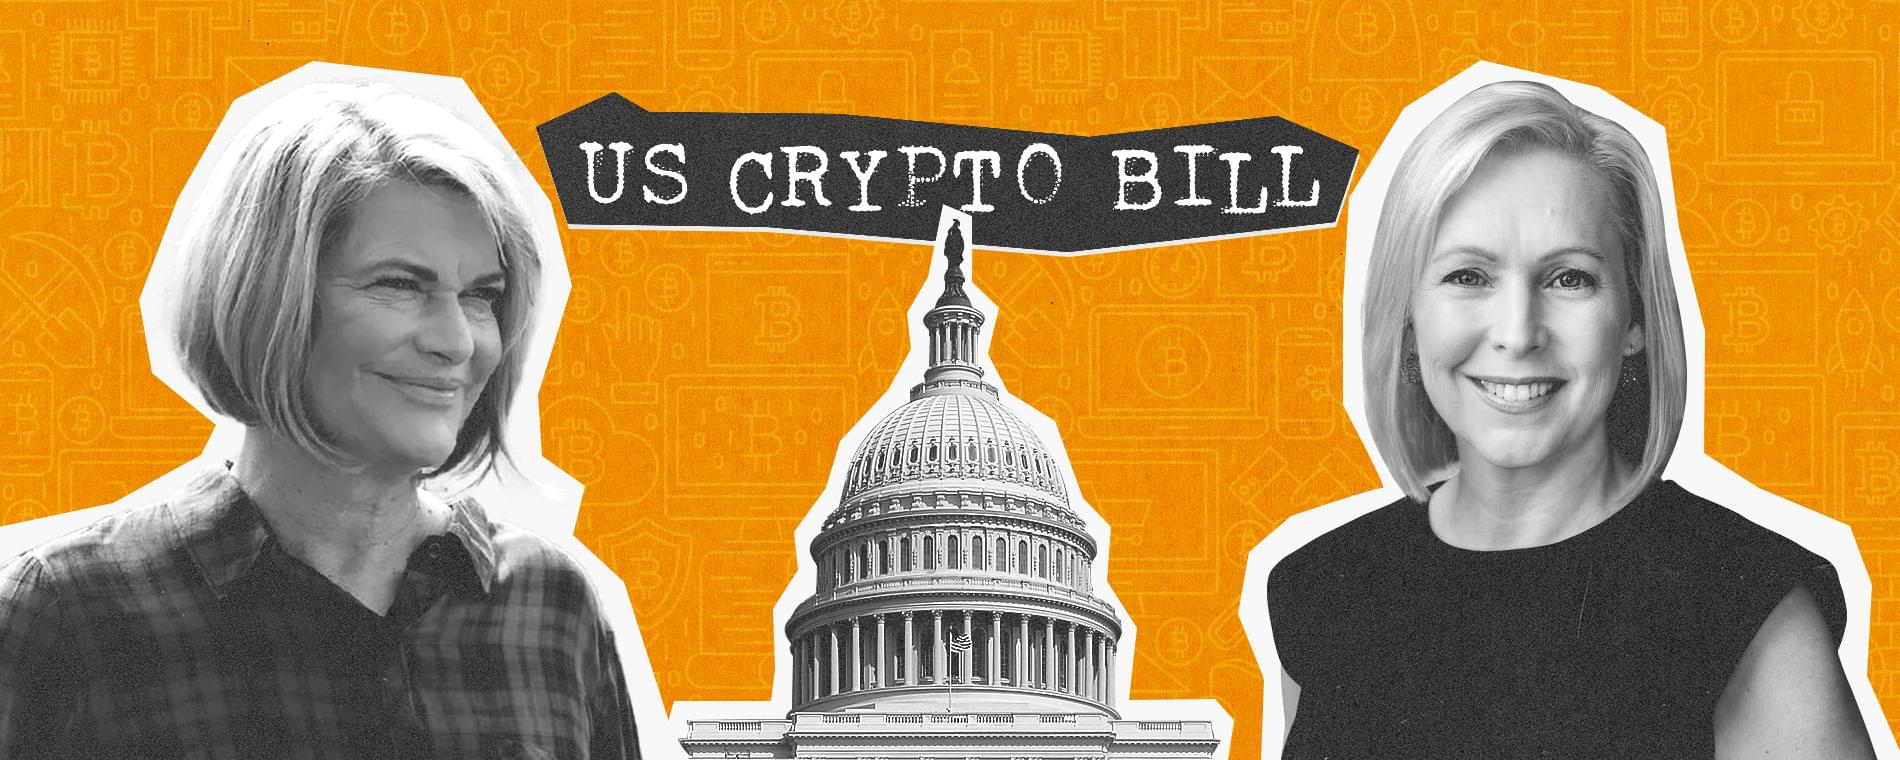 An early peek at landmark US crypto bill